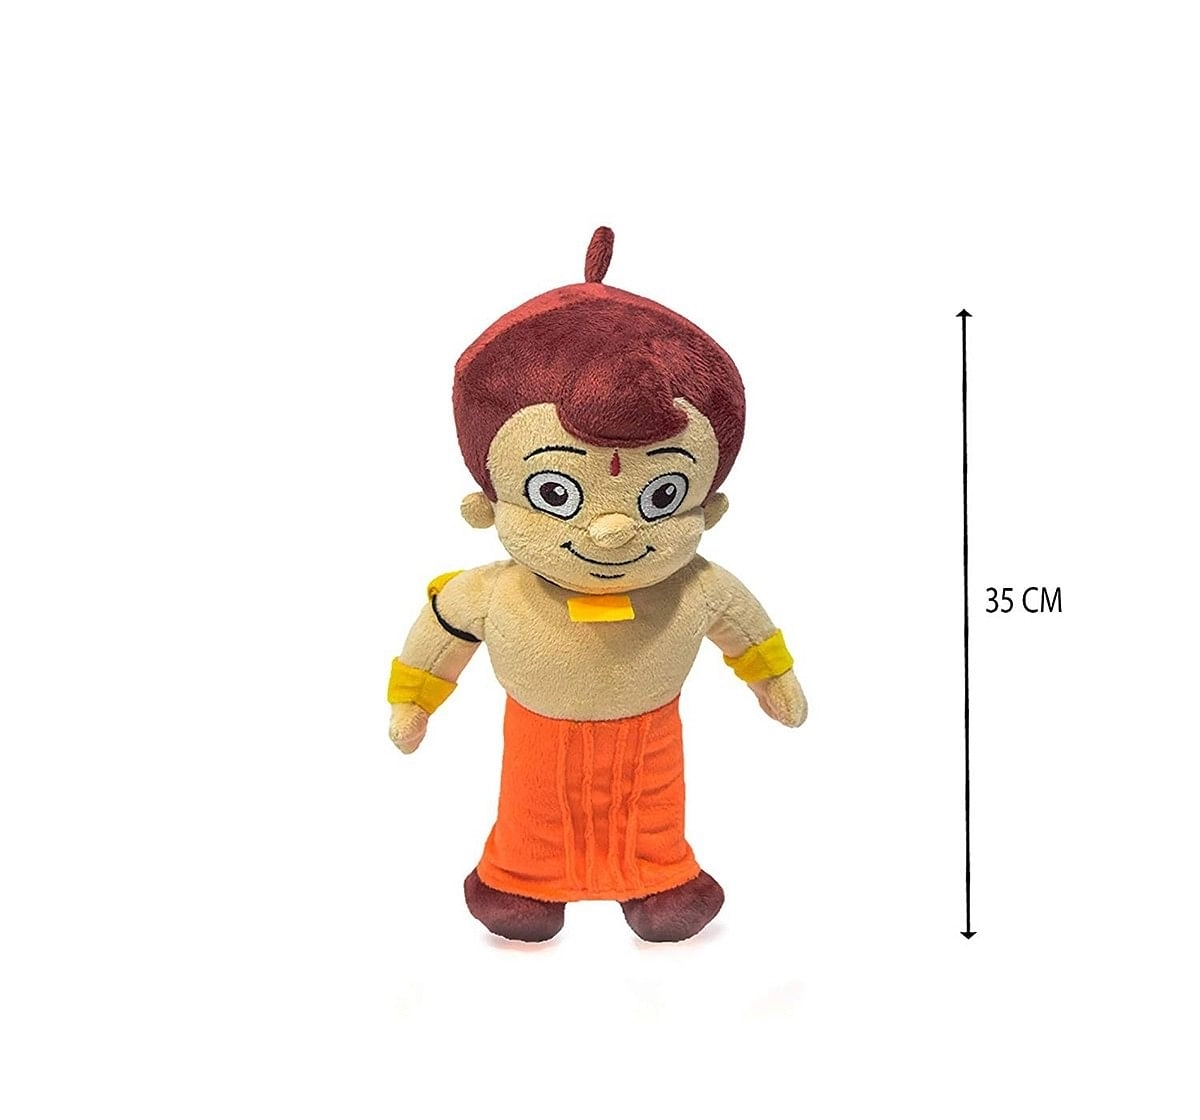  Chhota Bheem Dancing B/O Plush Toy Interactive Soft Toys for Kids age 2Y+ - 39 Cm 